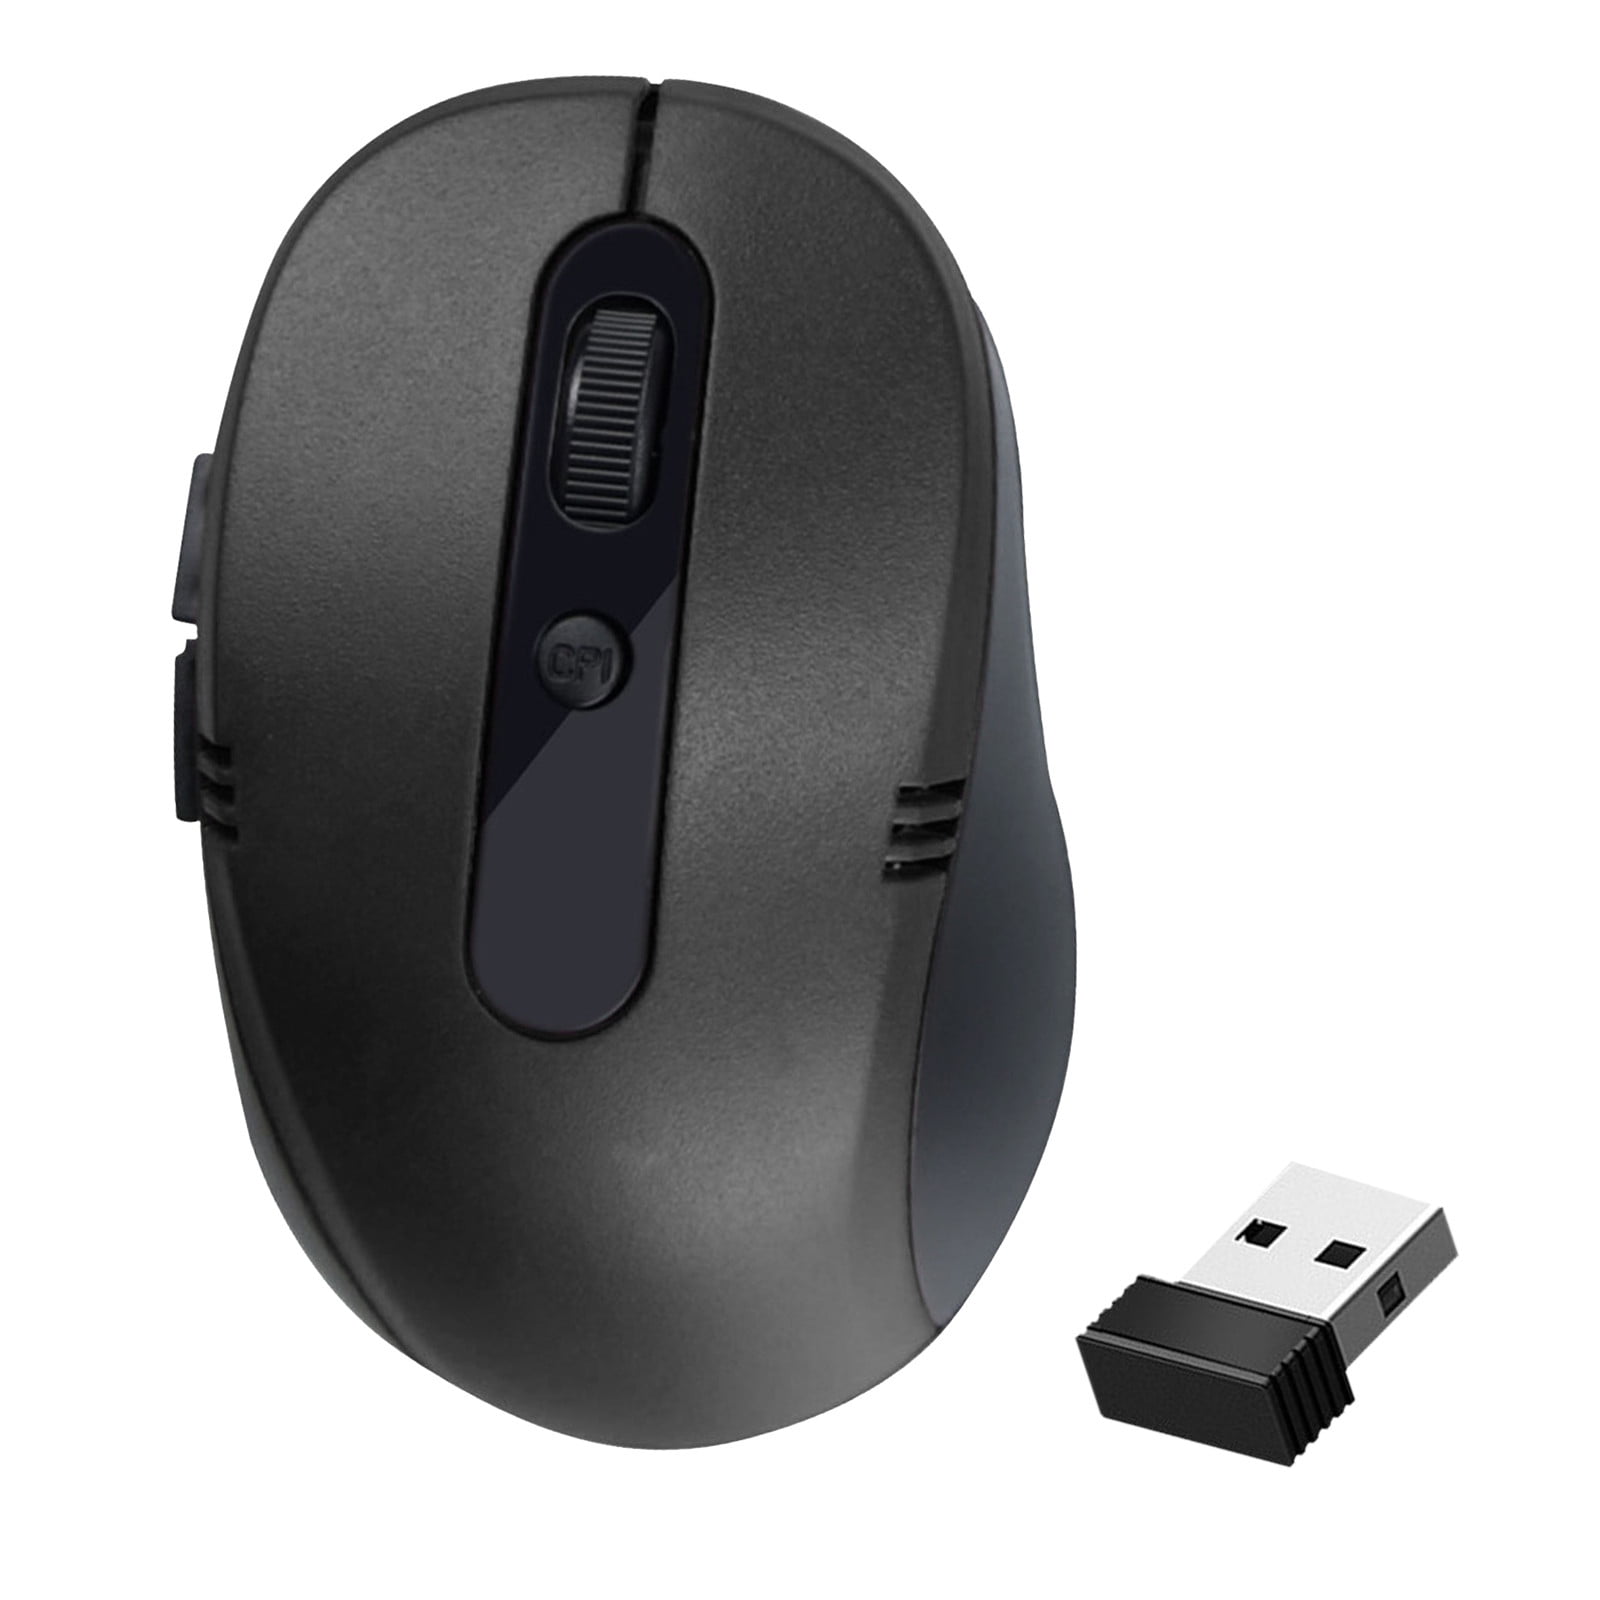 EFC4 2.4GHz 6D 1600DPI USB Wireless Optical Mouse For Laptops Desktop PC Black, 